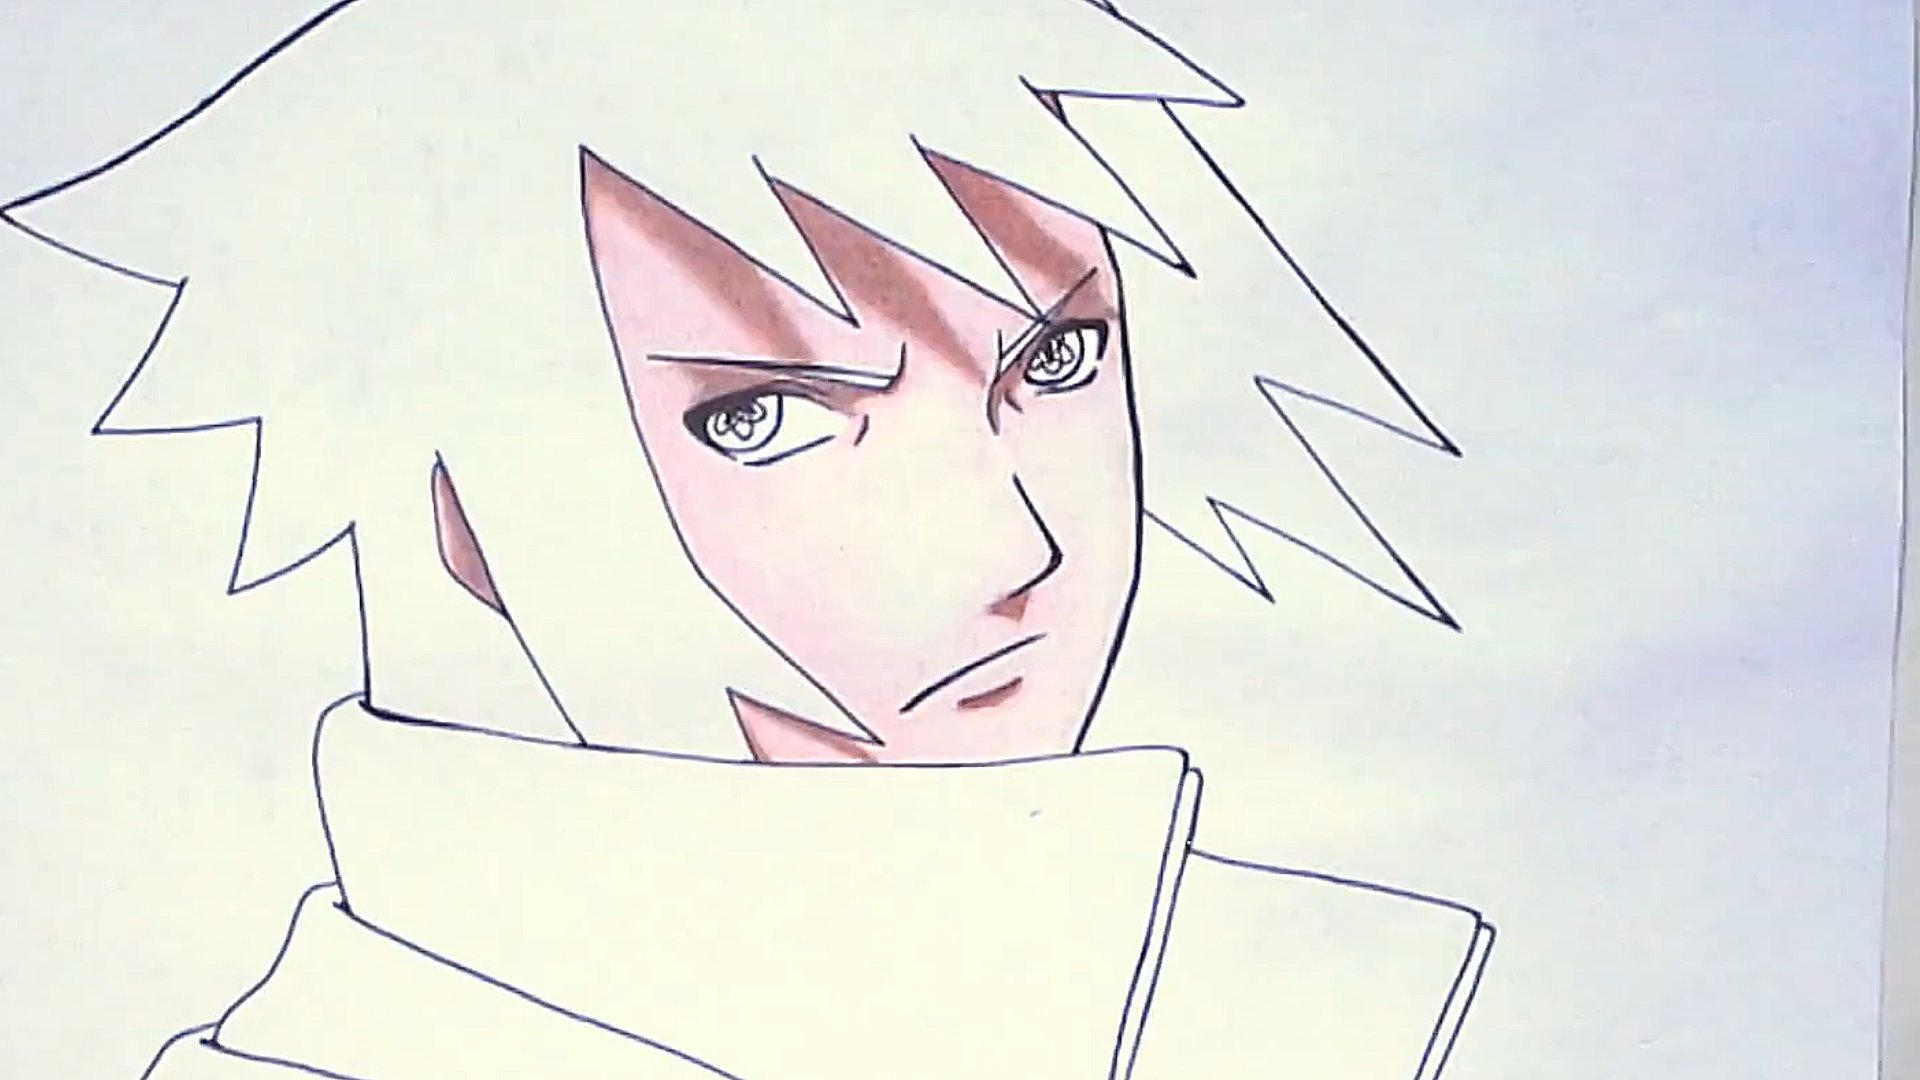 Leo Desenhista on X: Bora aprender a desenhar esse Sasuke adulto